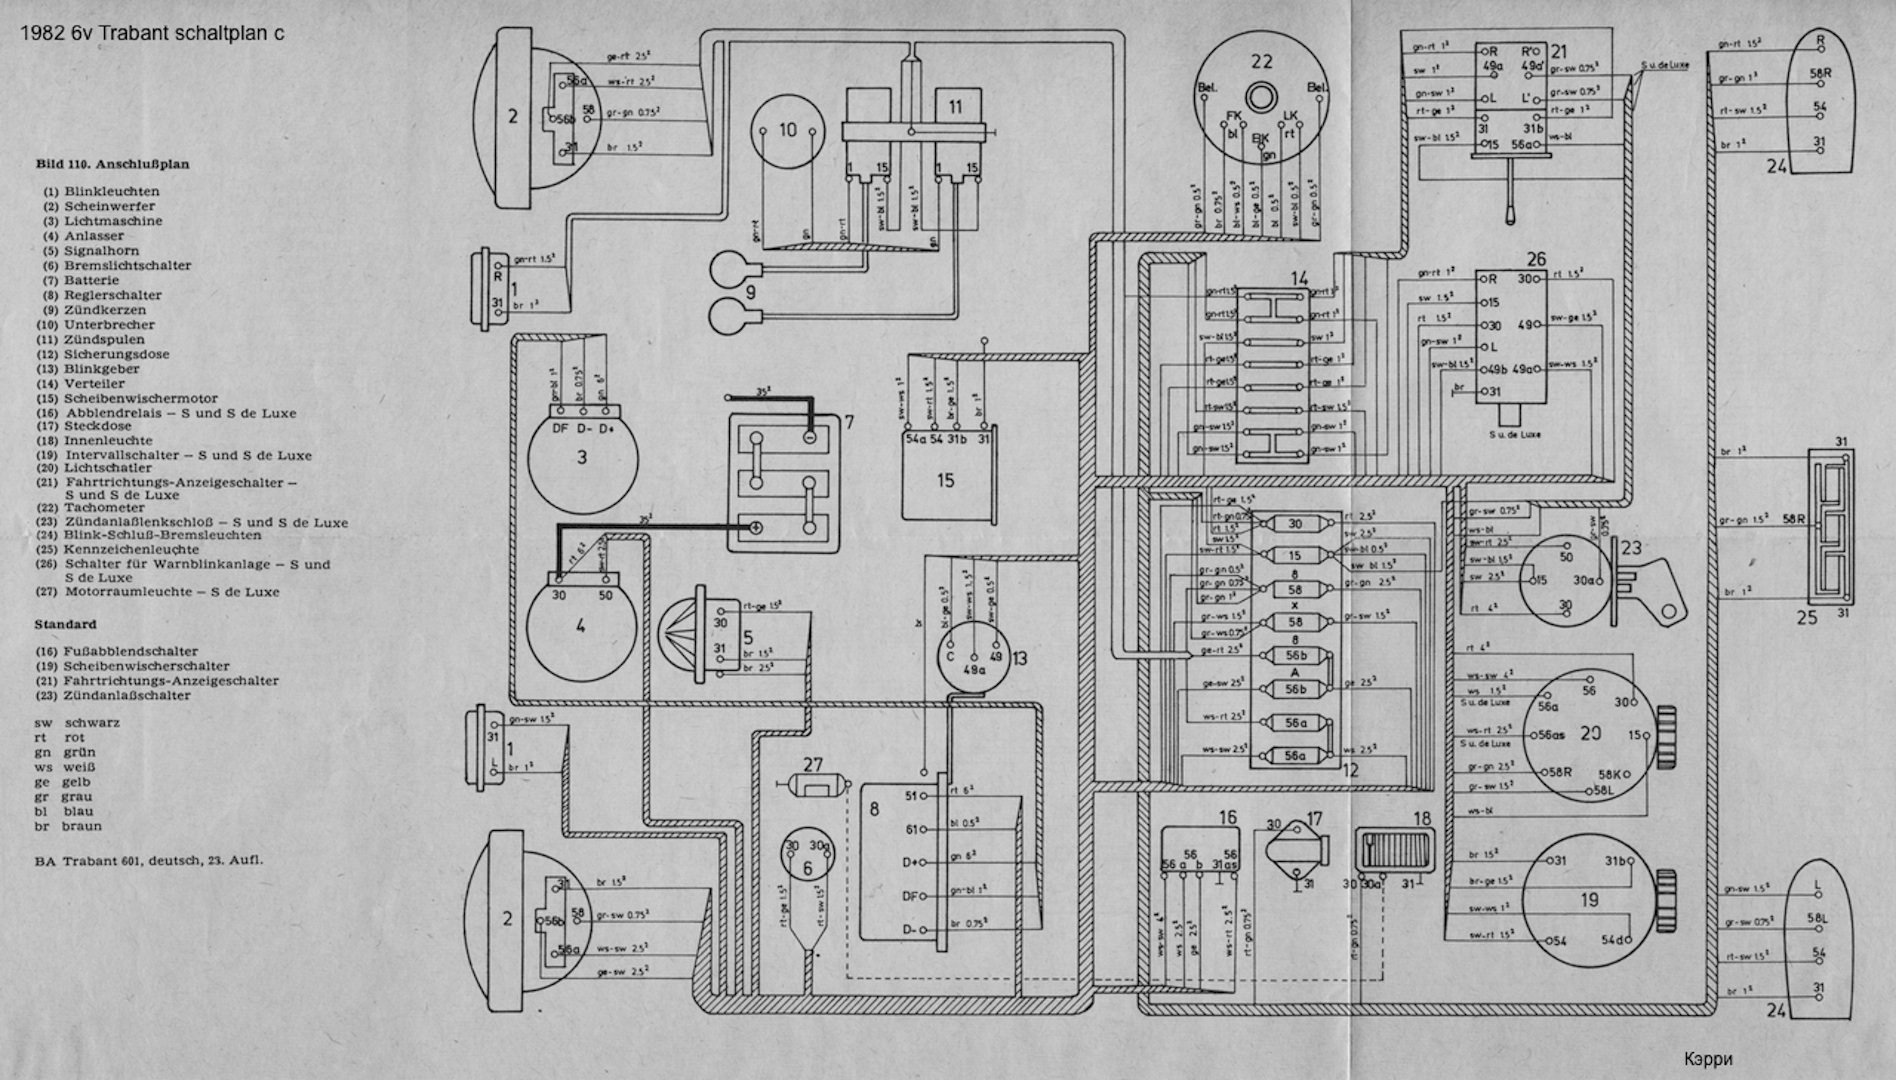 [DIAGRAM] Delco Alternator Wiring Diagram 24v - MYDIAGRAM.ONLINE